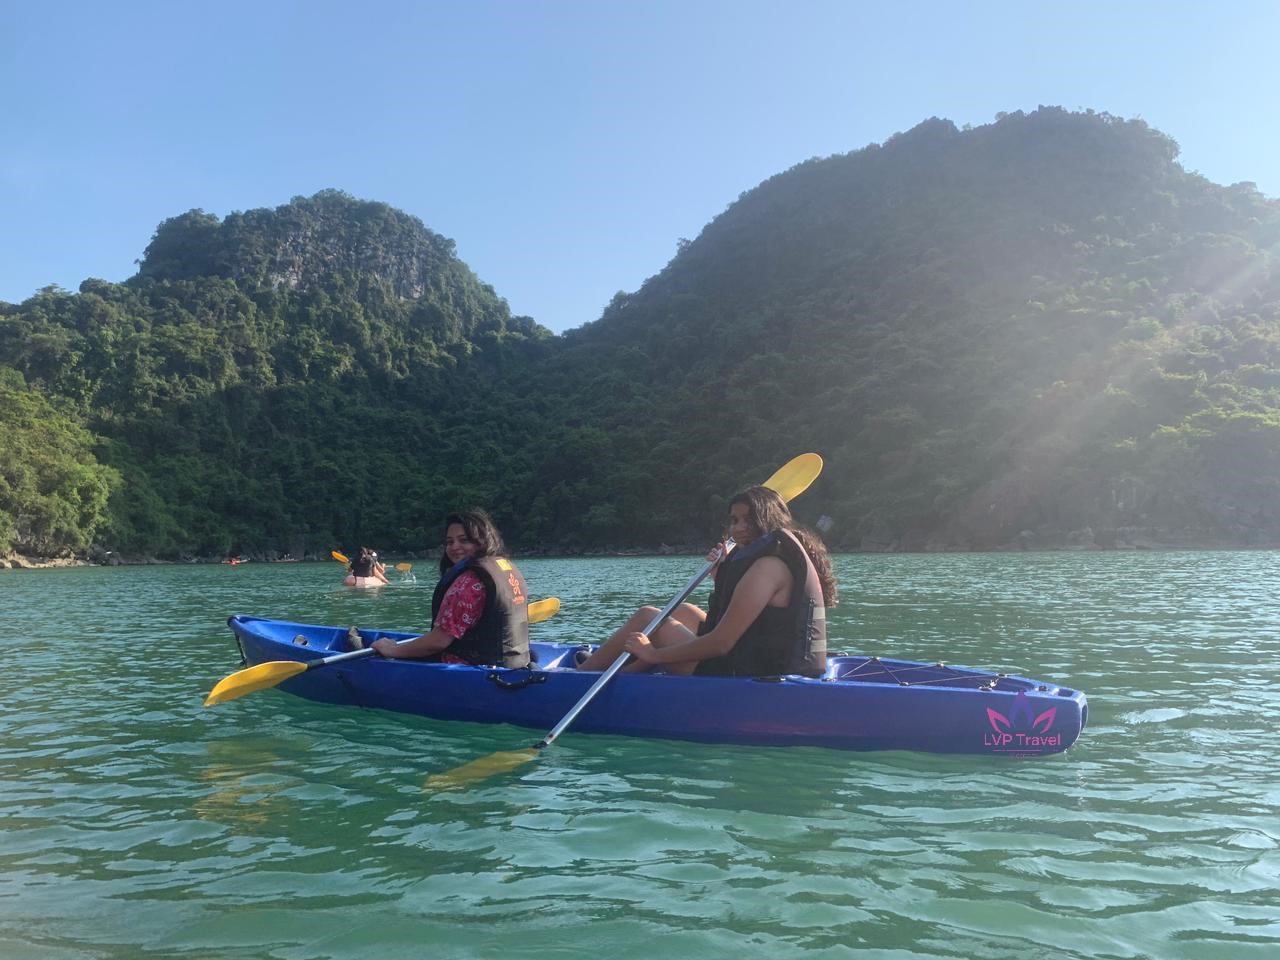 Kayaking in the Halong Bay